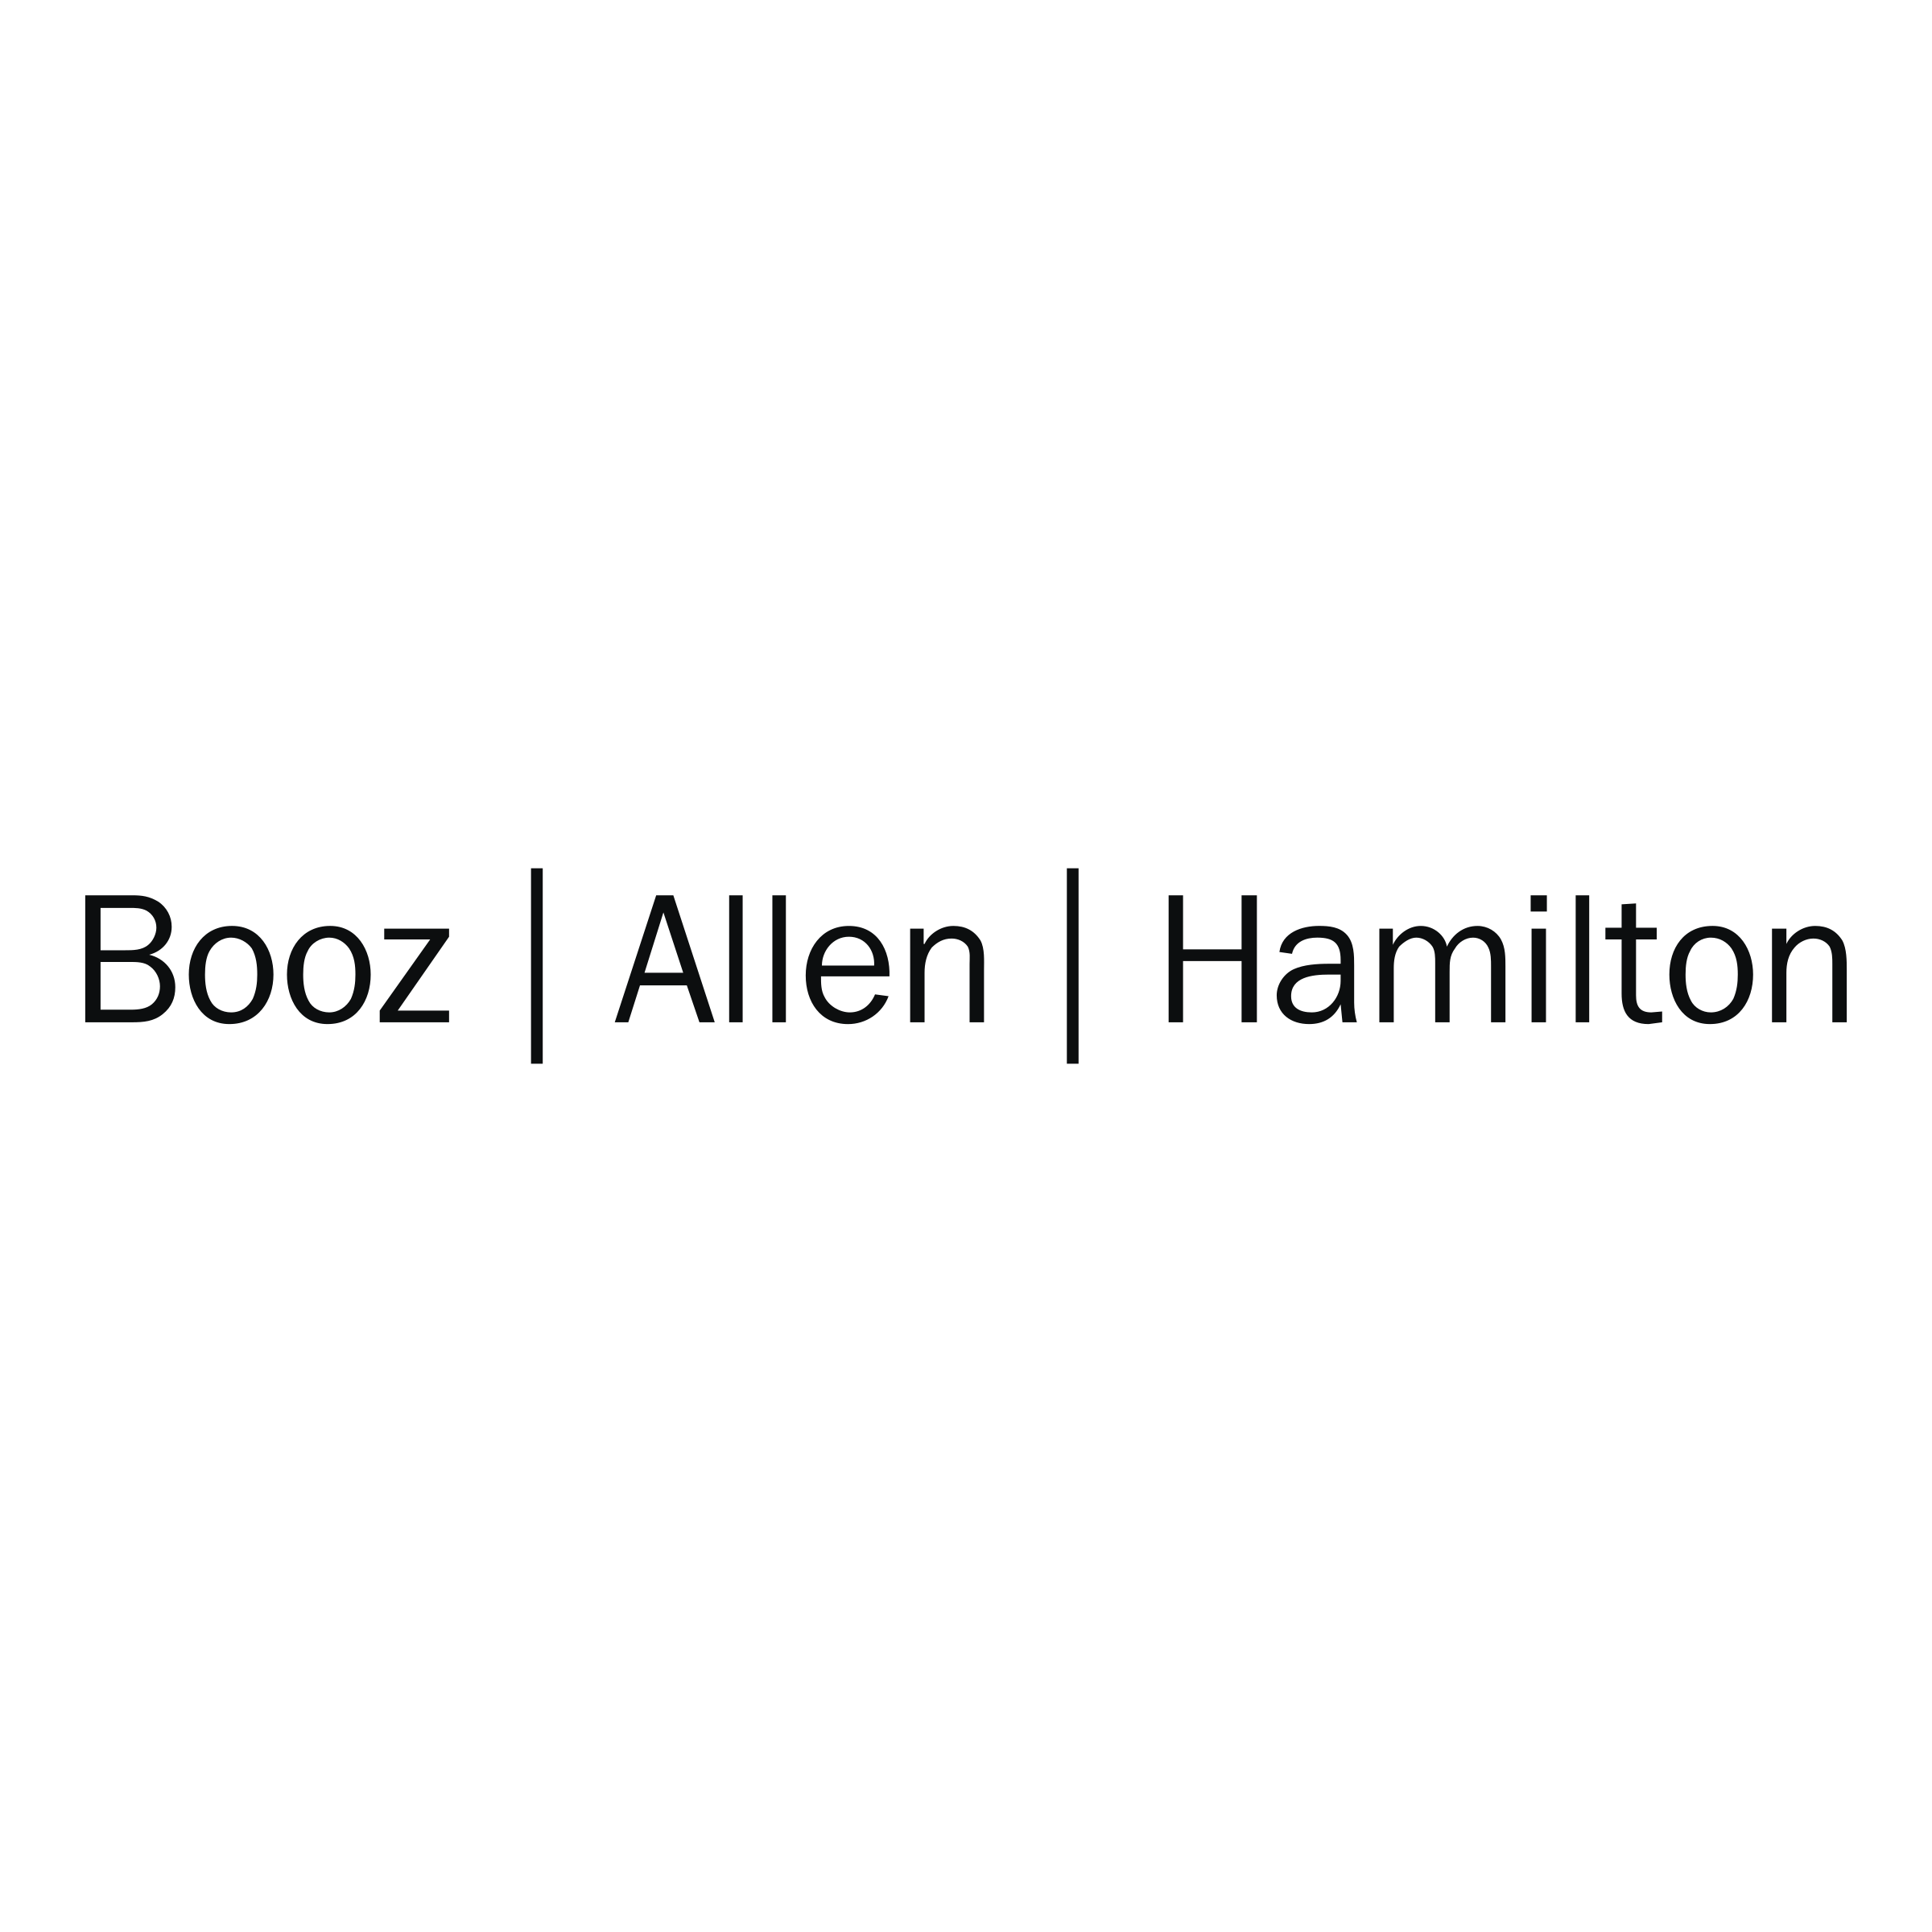 Booz Allen Hamilton Interview Questions